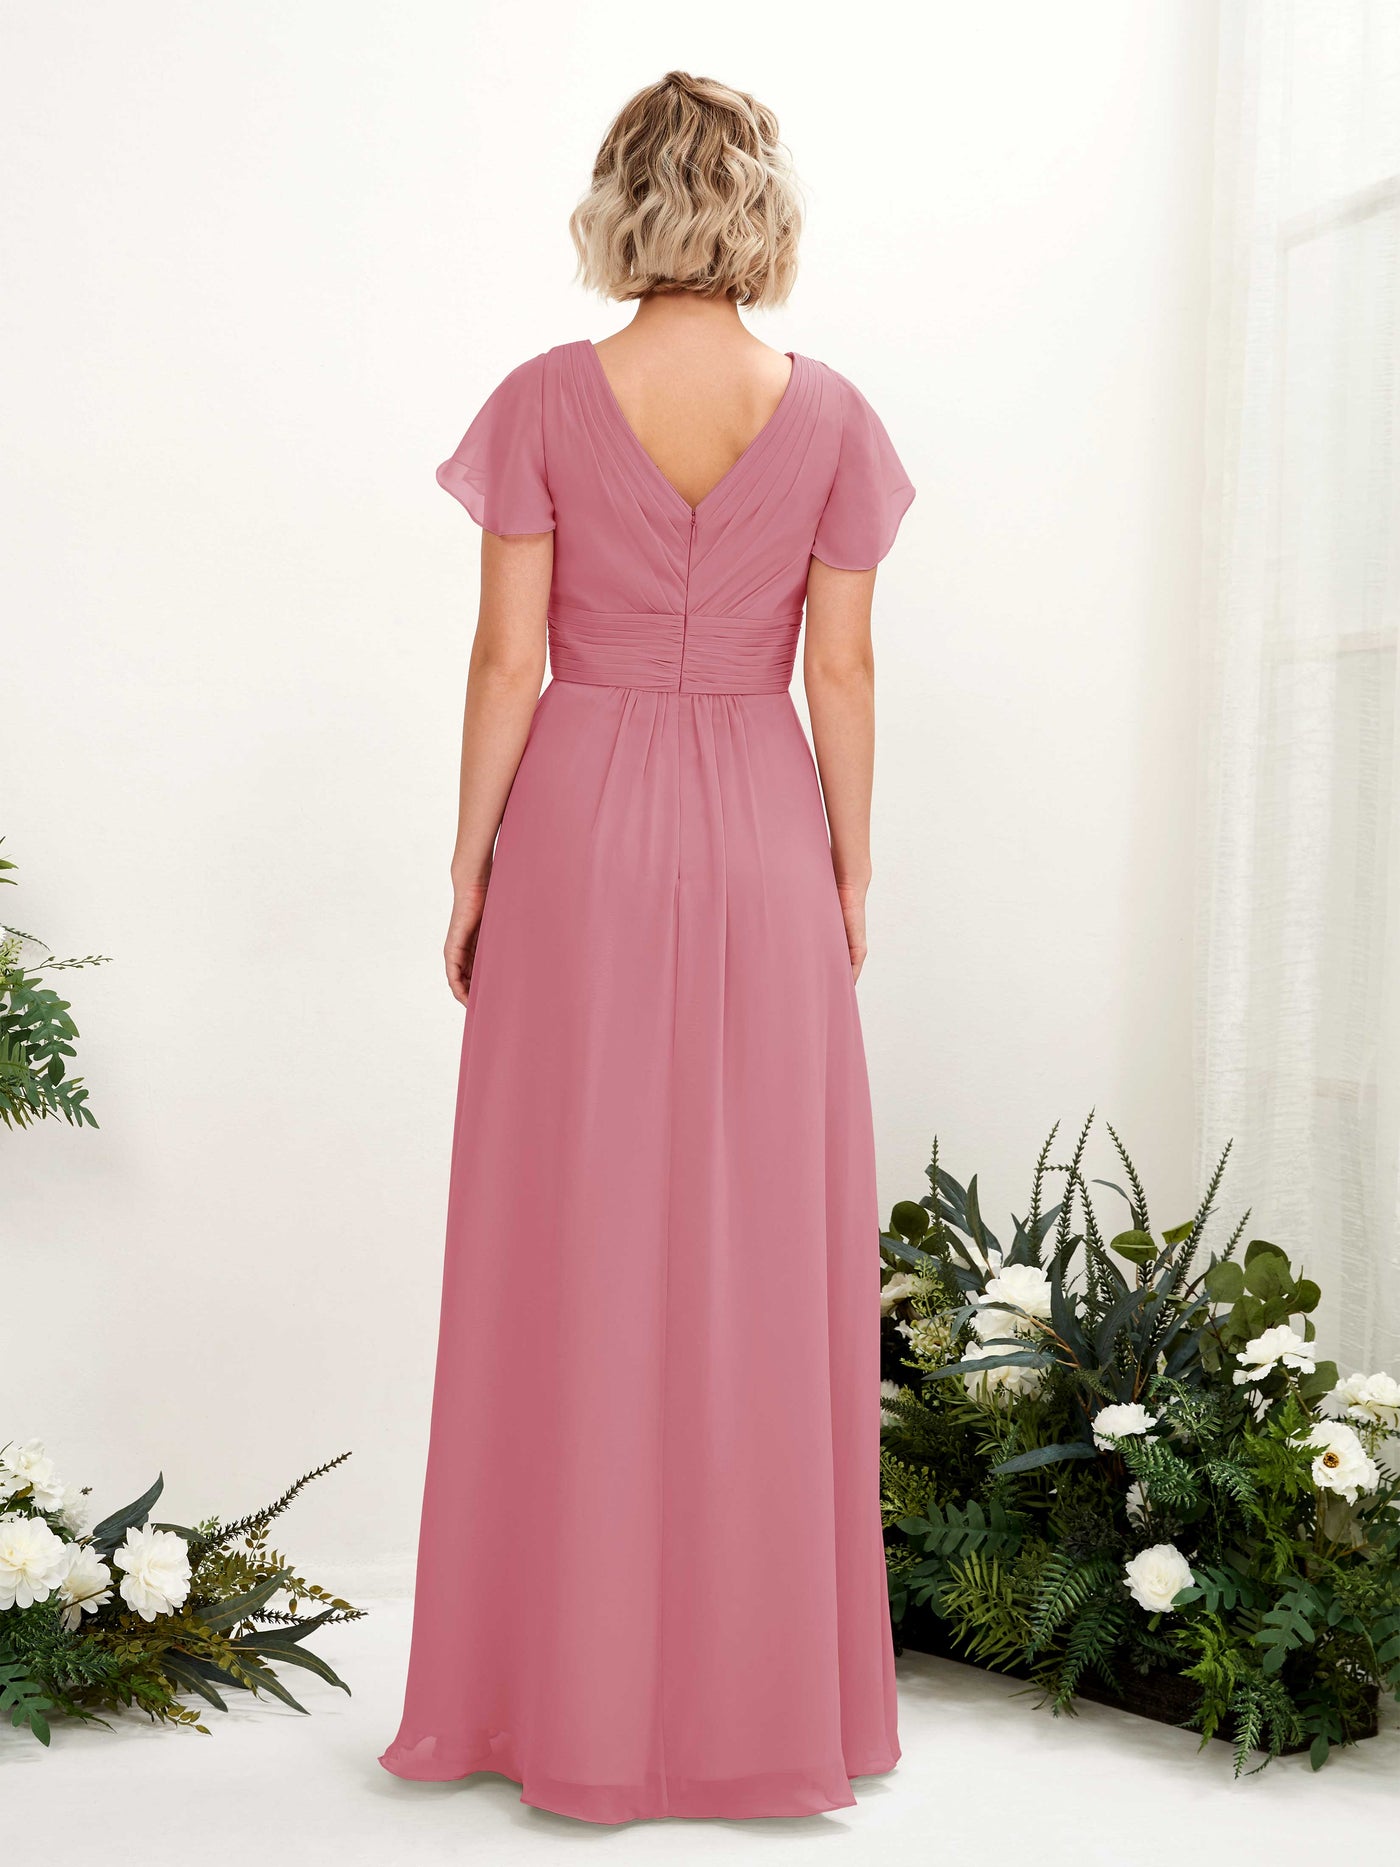 Desert Rose Bridesmaid Dresses Bridesmaid Dress A-line Chiffon V-neck Full Length Short Sleeves Wedding Party Dress (81224311)#color_desert-rose